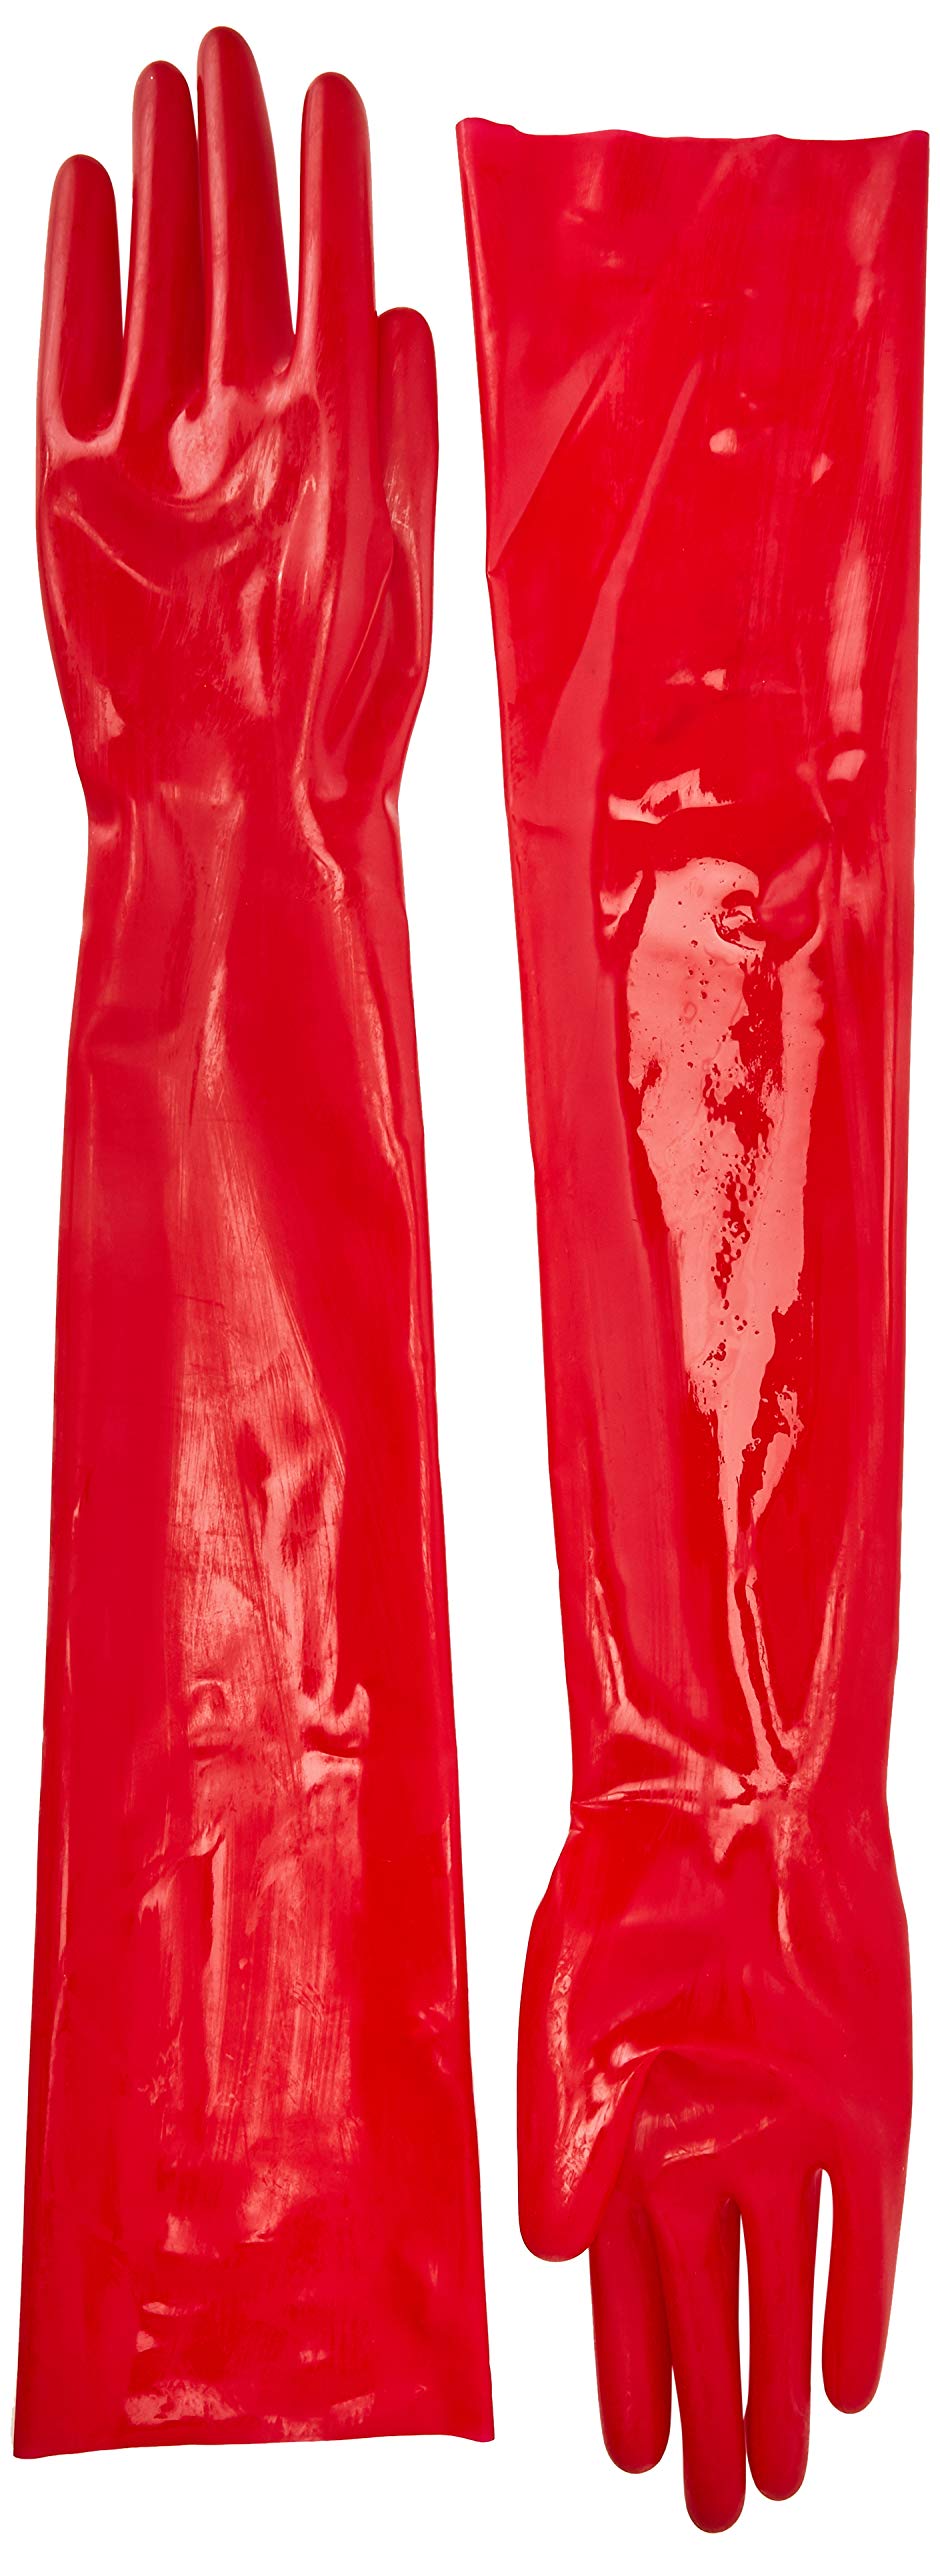 The Latex Collection Damen 29001493031 The Latex Collection Latex Handschuhe Rot Medium, Rot (Rosso 001), Einheitsgröße (Herstellergröße: Medium) EU